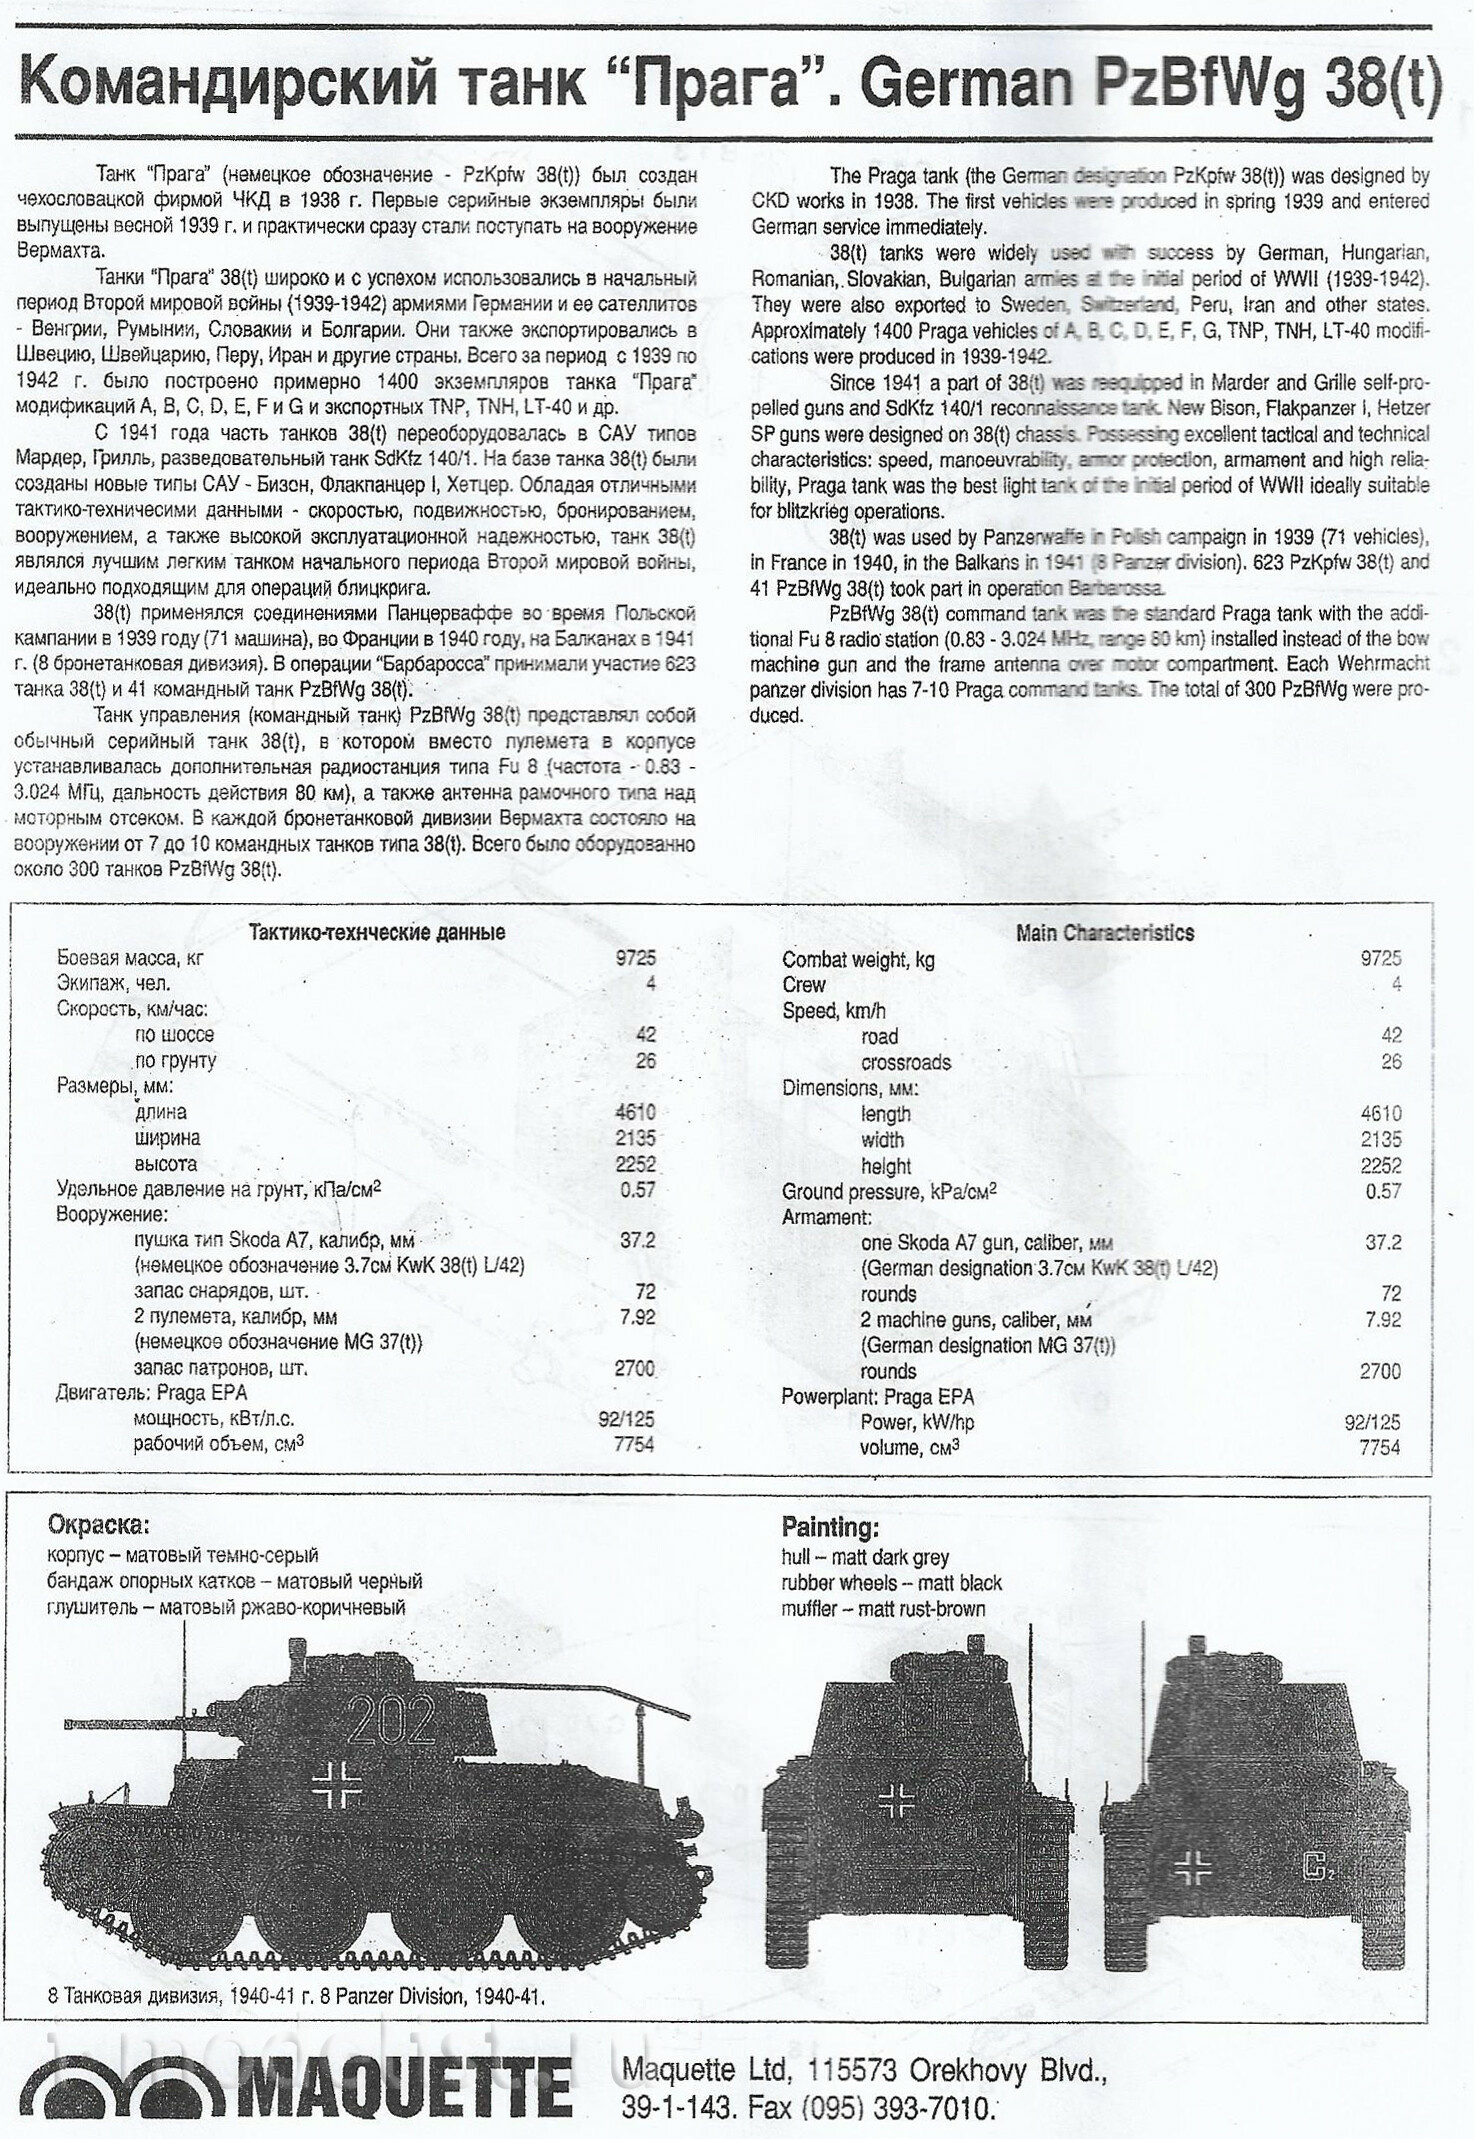 3541 Макет 1/35 Командирский танк PzBfwg 38t (Прага)